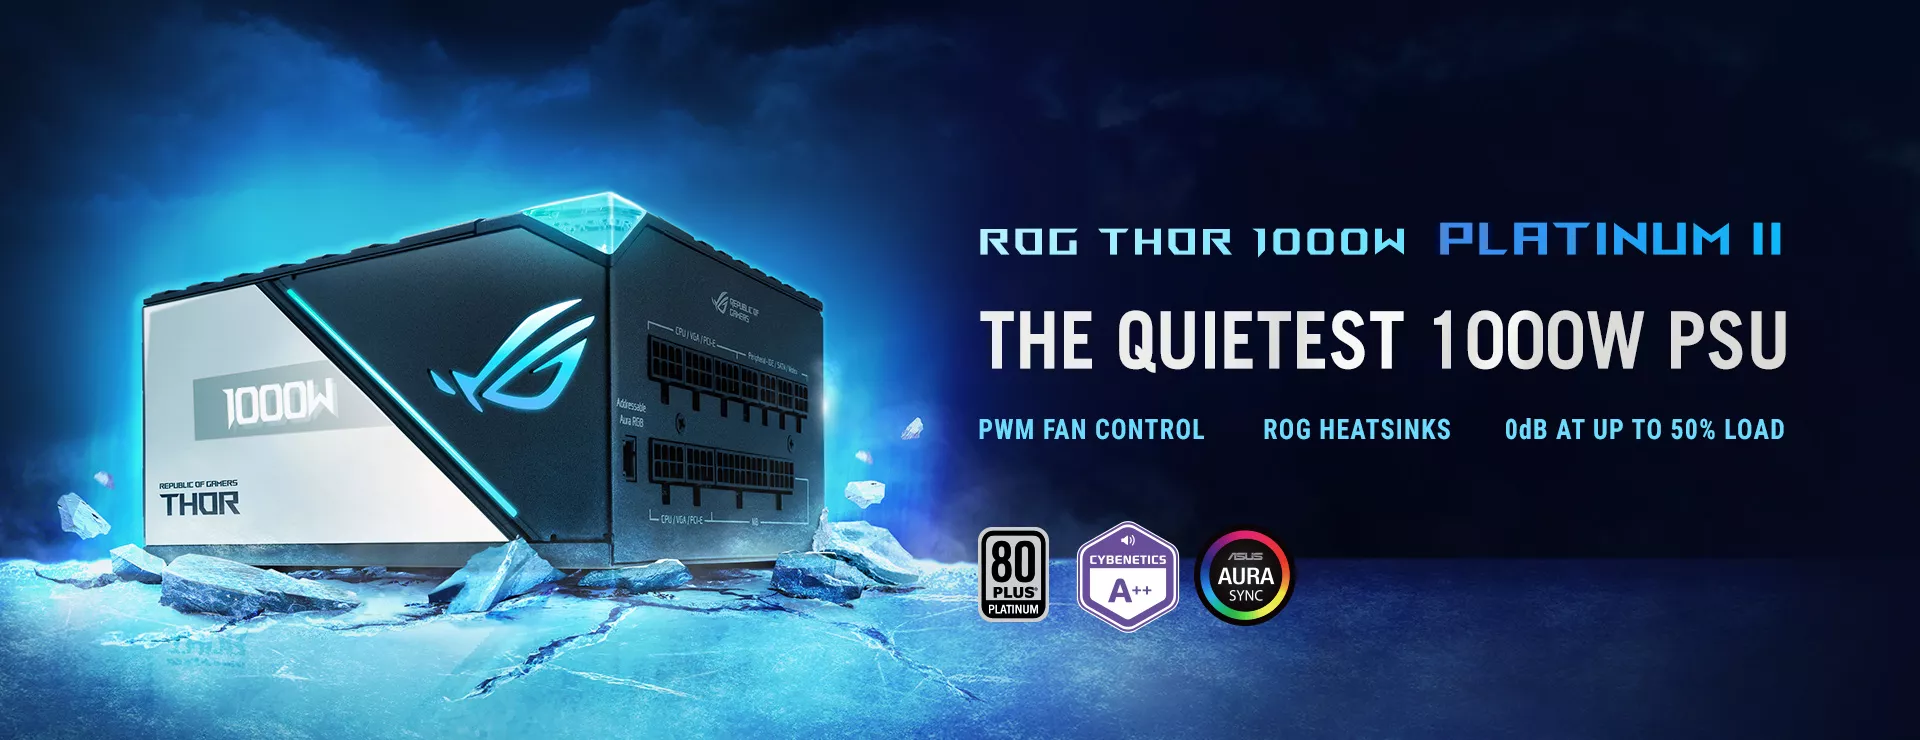 ROG Thor 1000W Platinum II